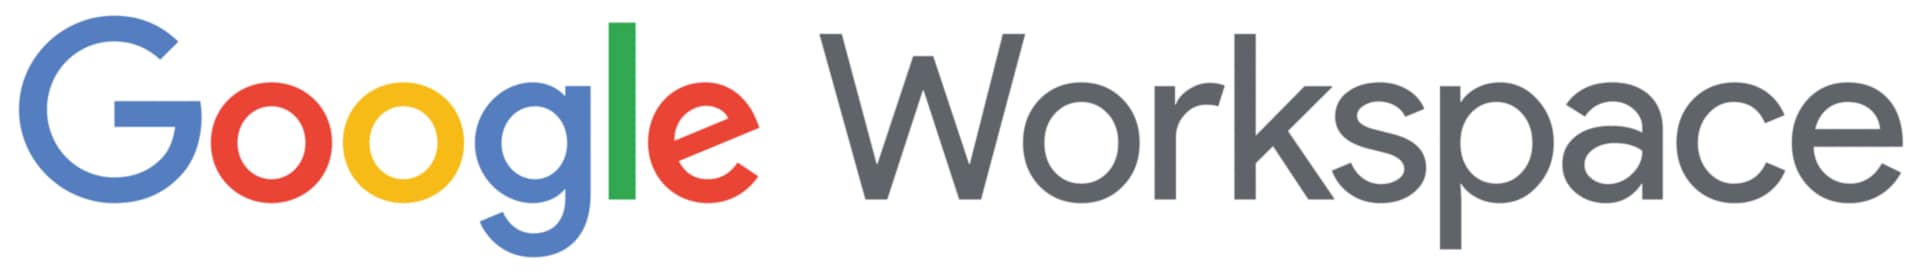 CDW Workplace Solution Partner Google Workspace